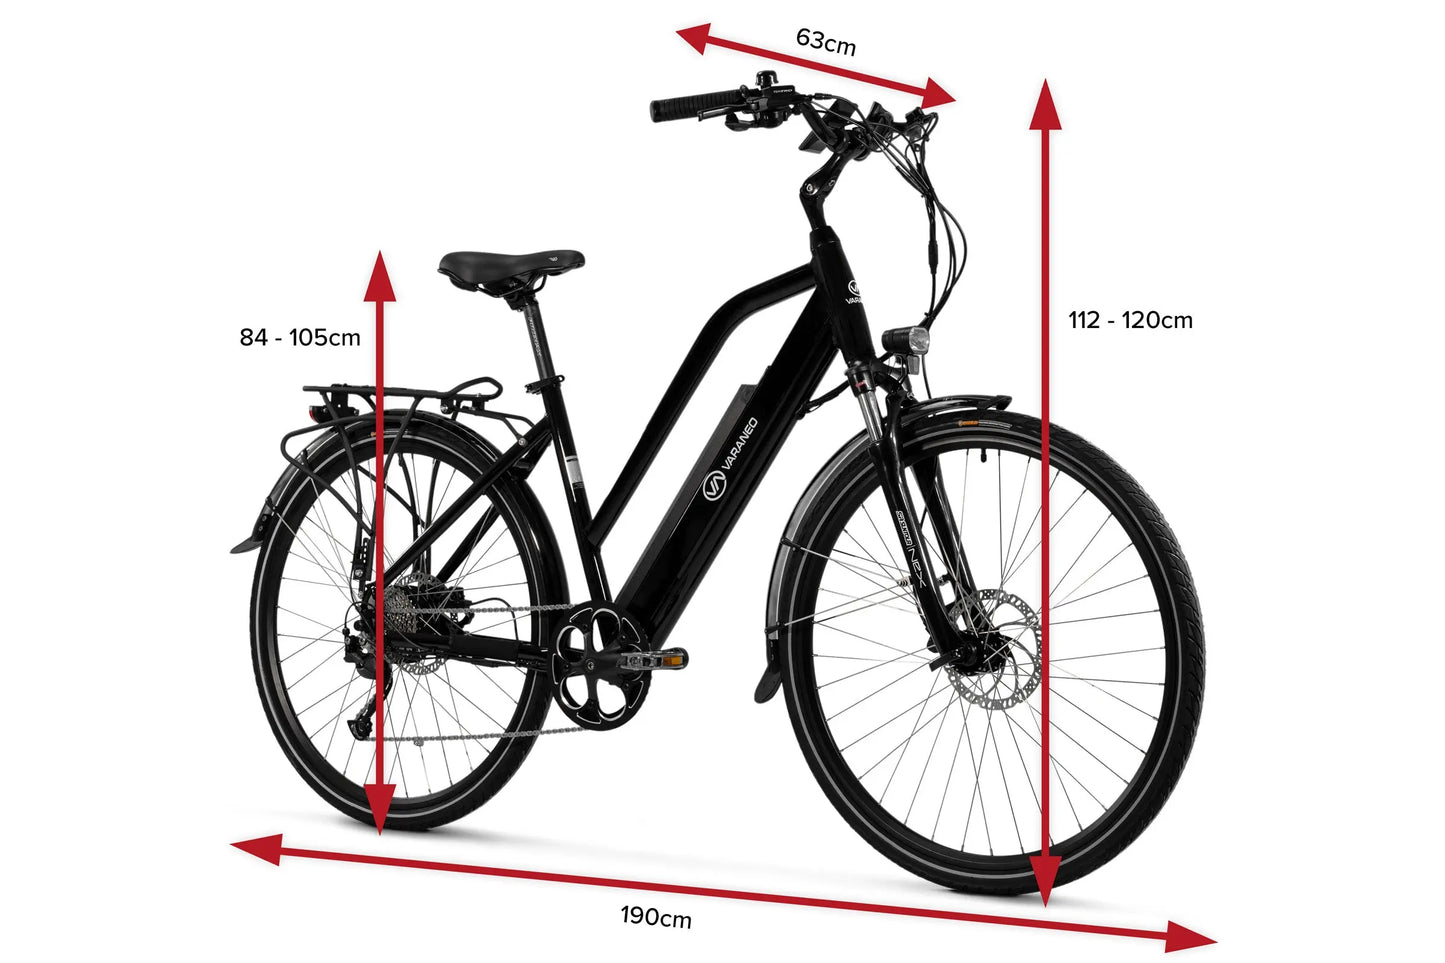 e-Bike | VARANEO Trekkingrad S Damen  (25km/h, bis zu 150km) e-mobility.vip